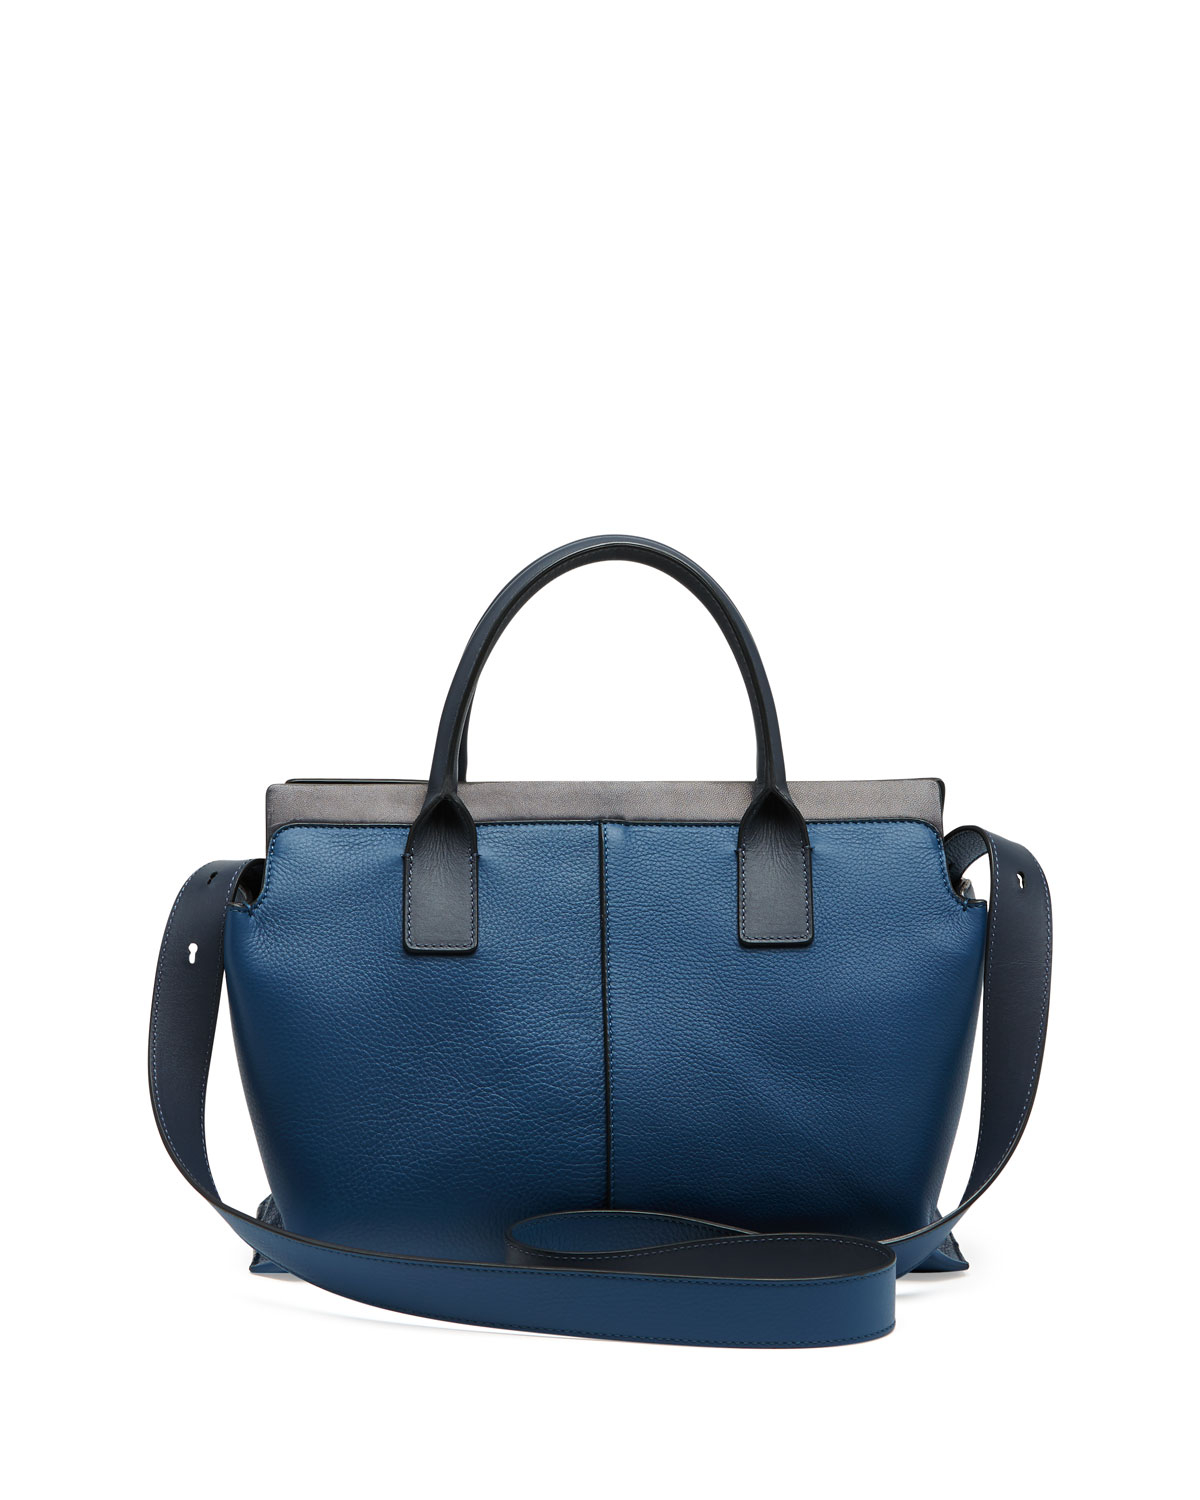 Lyst - Chloé Cate Medium Double Zip Satchel Bag in Blue